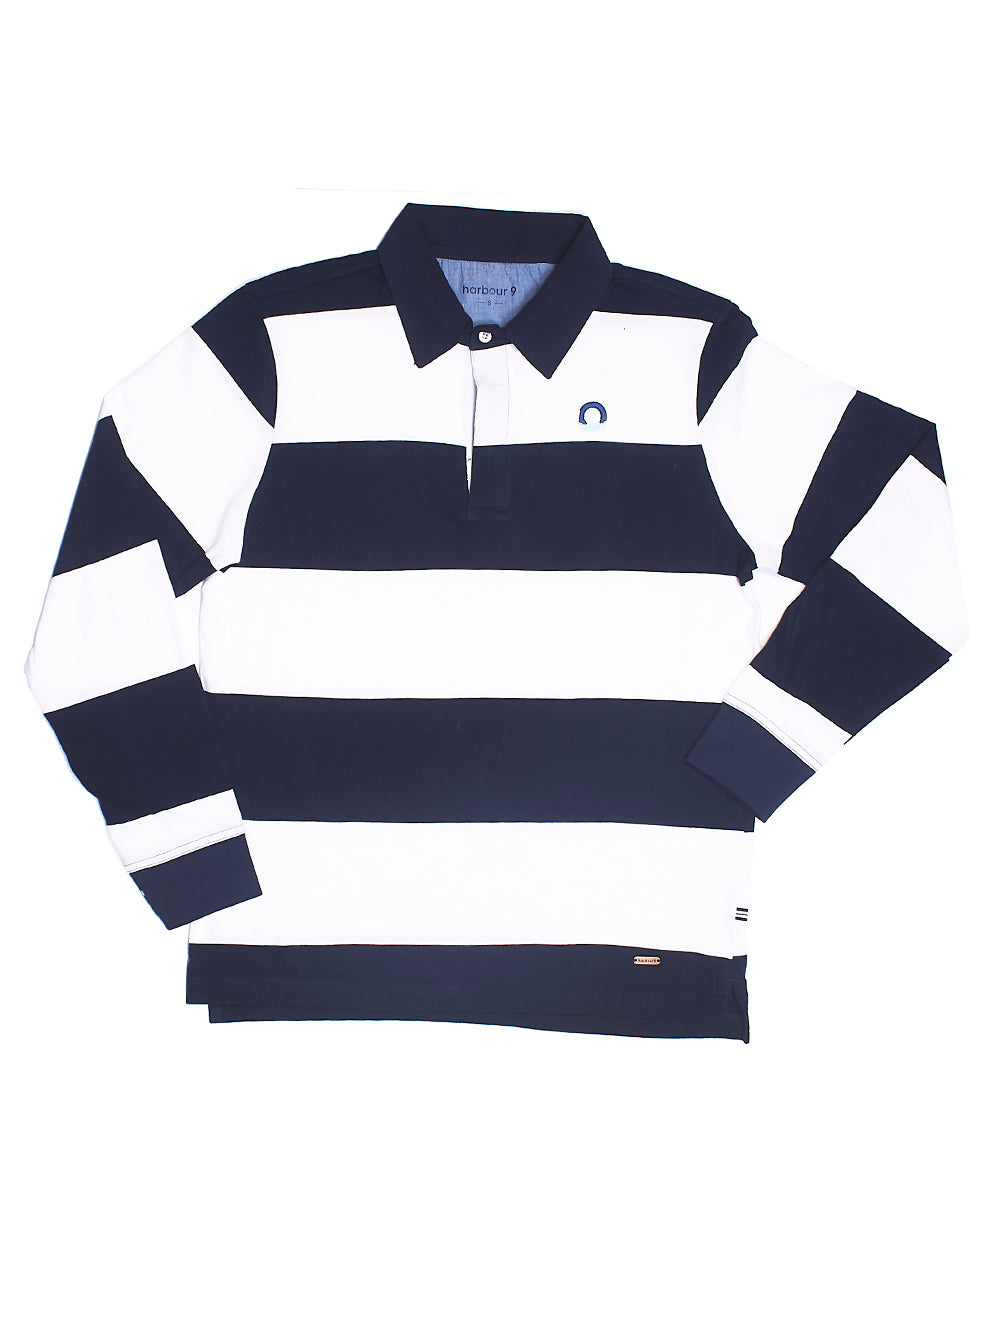 The Striped Fleece Sweatshirt Navy Blue